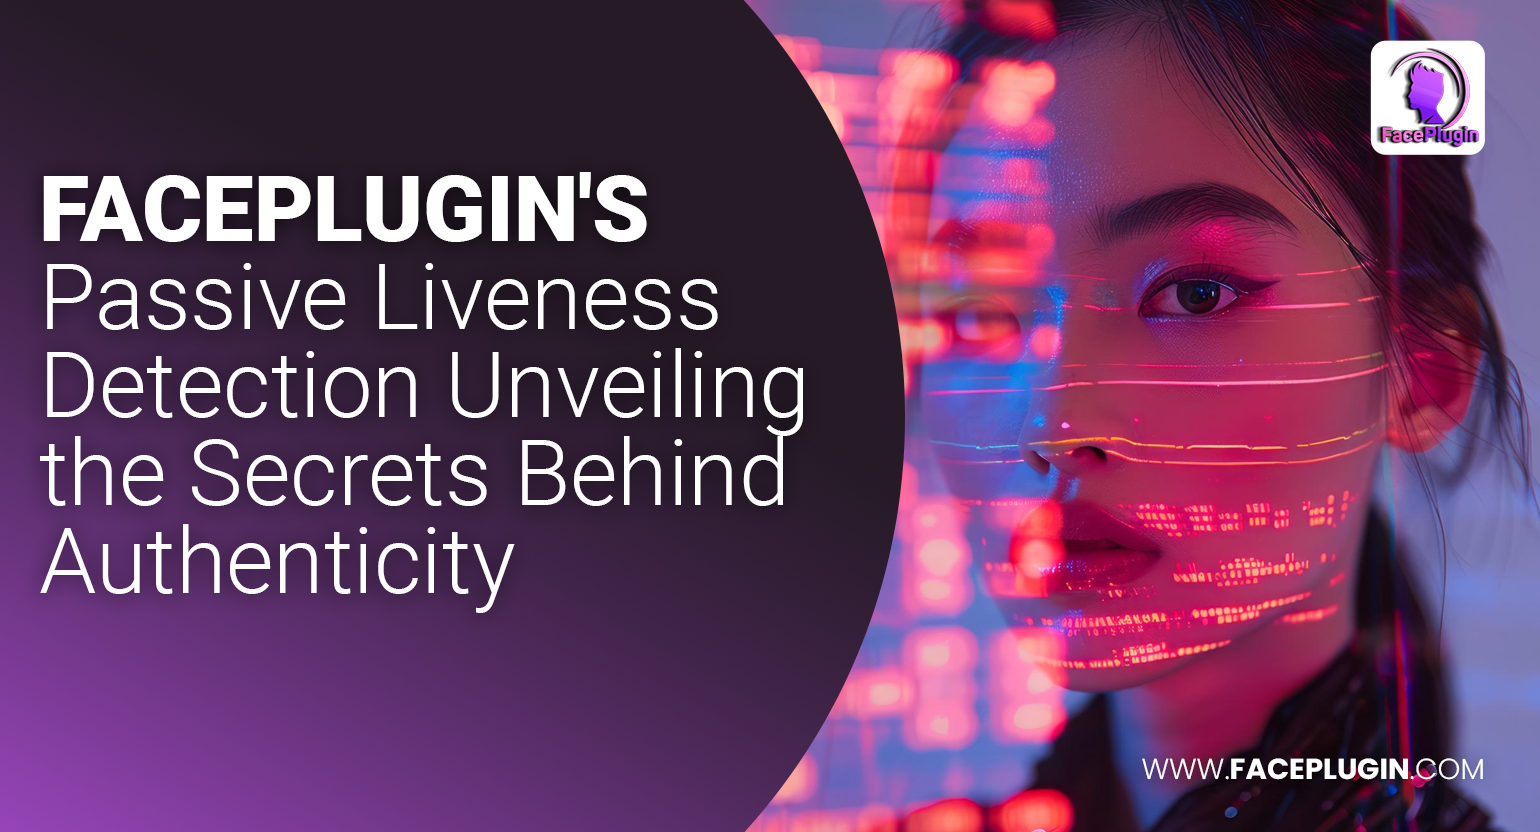 FacePlugin's Passive Liveness Detection Secrets Behind Authenticity